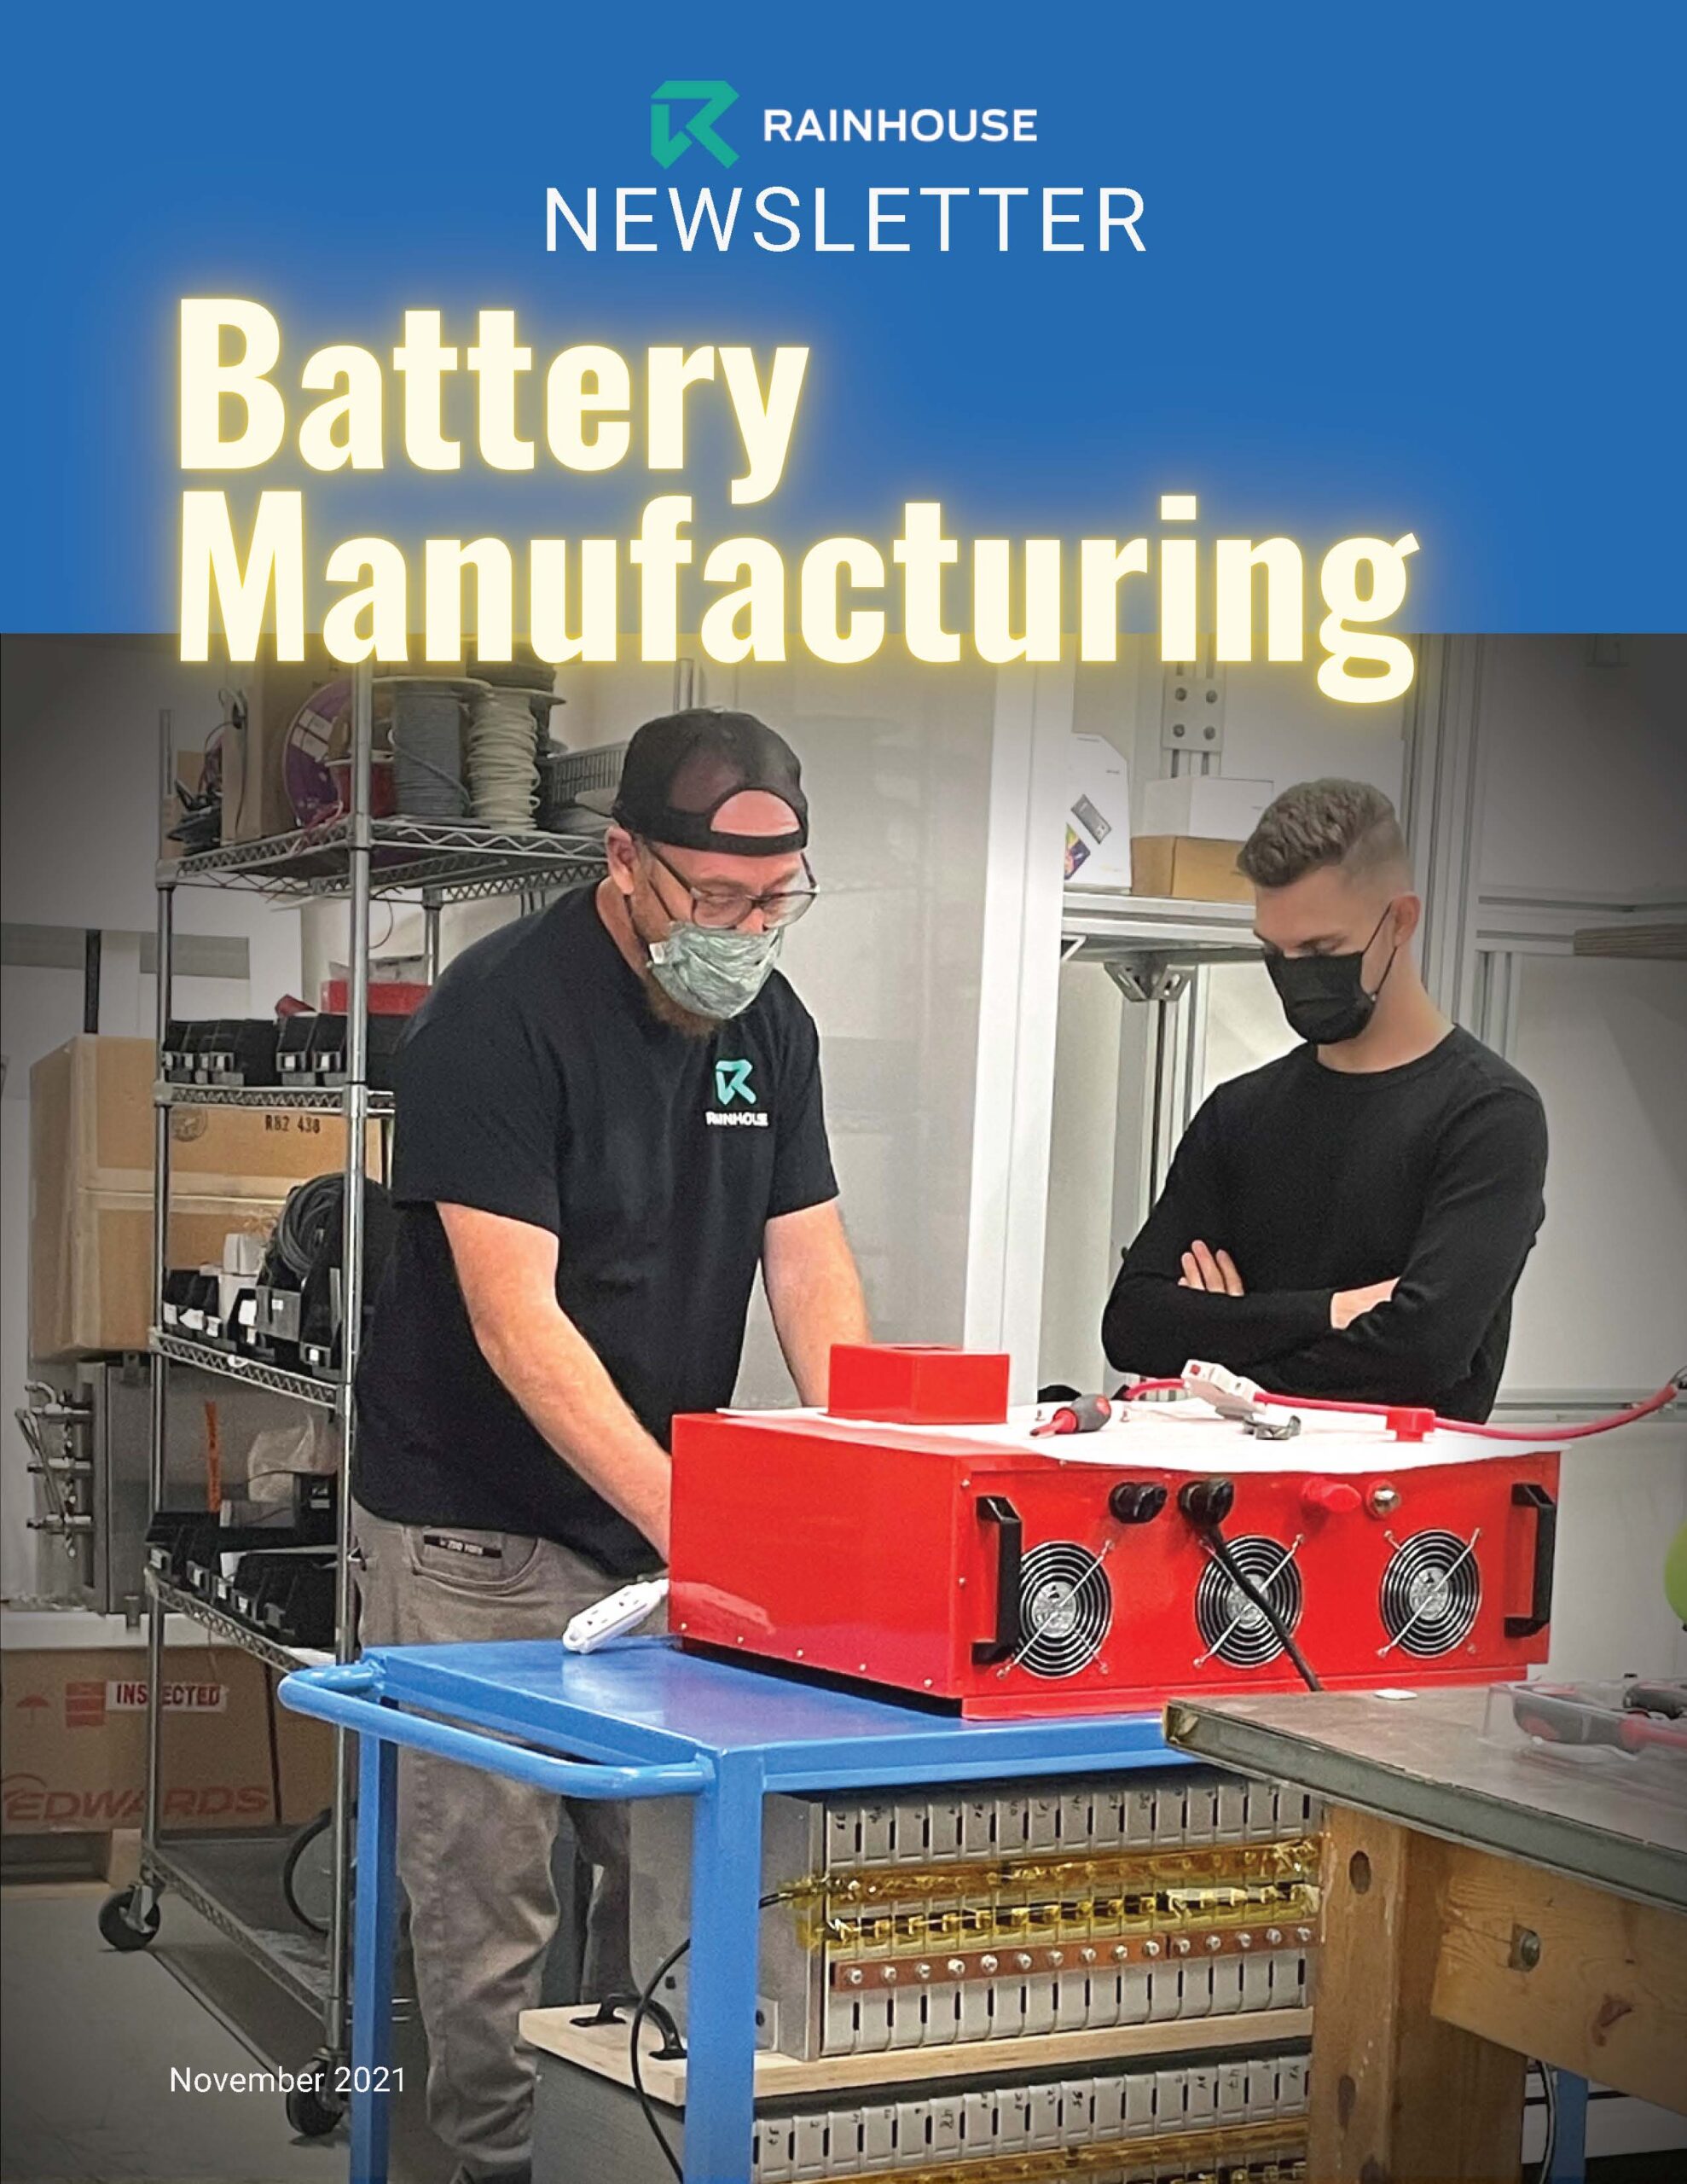 Becoming a Battery Manufacturer